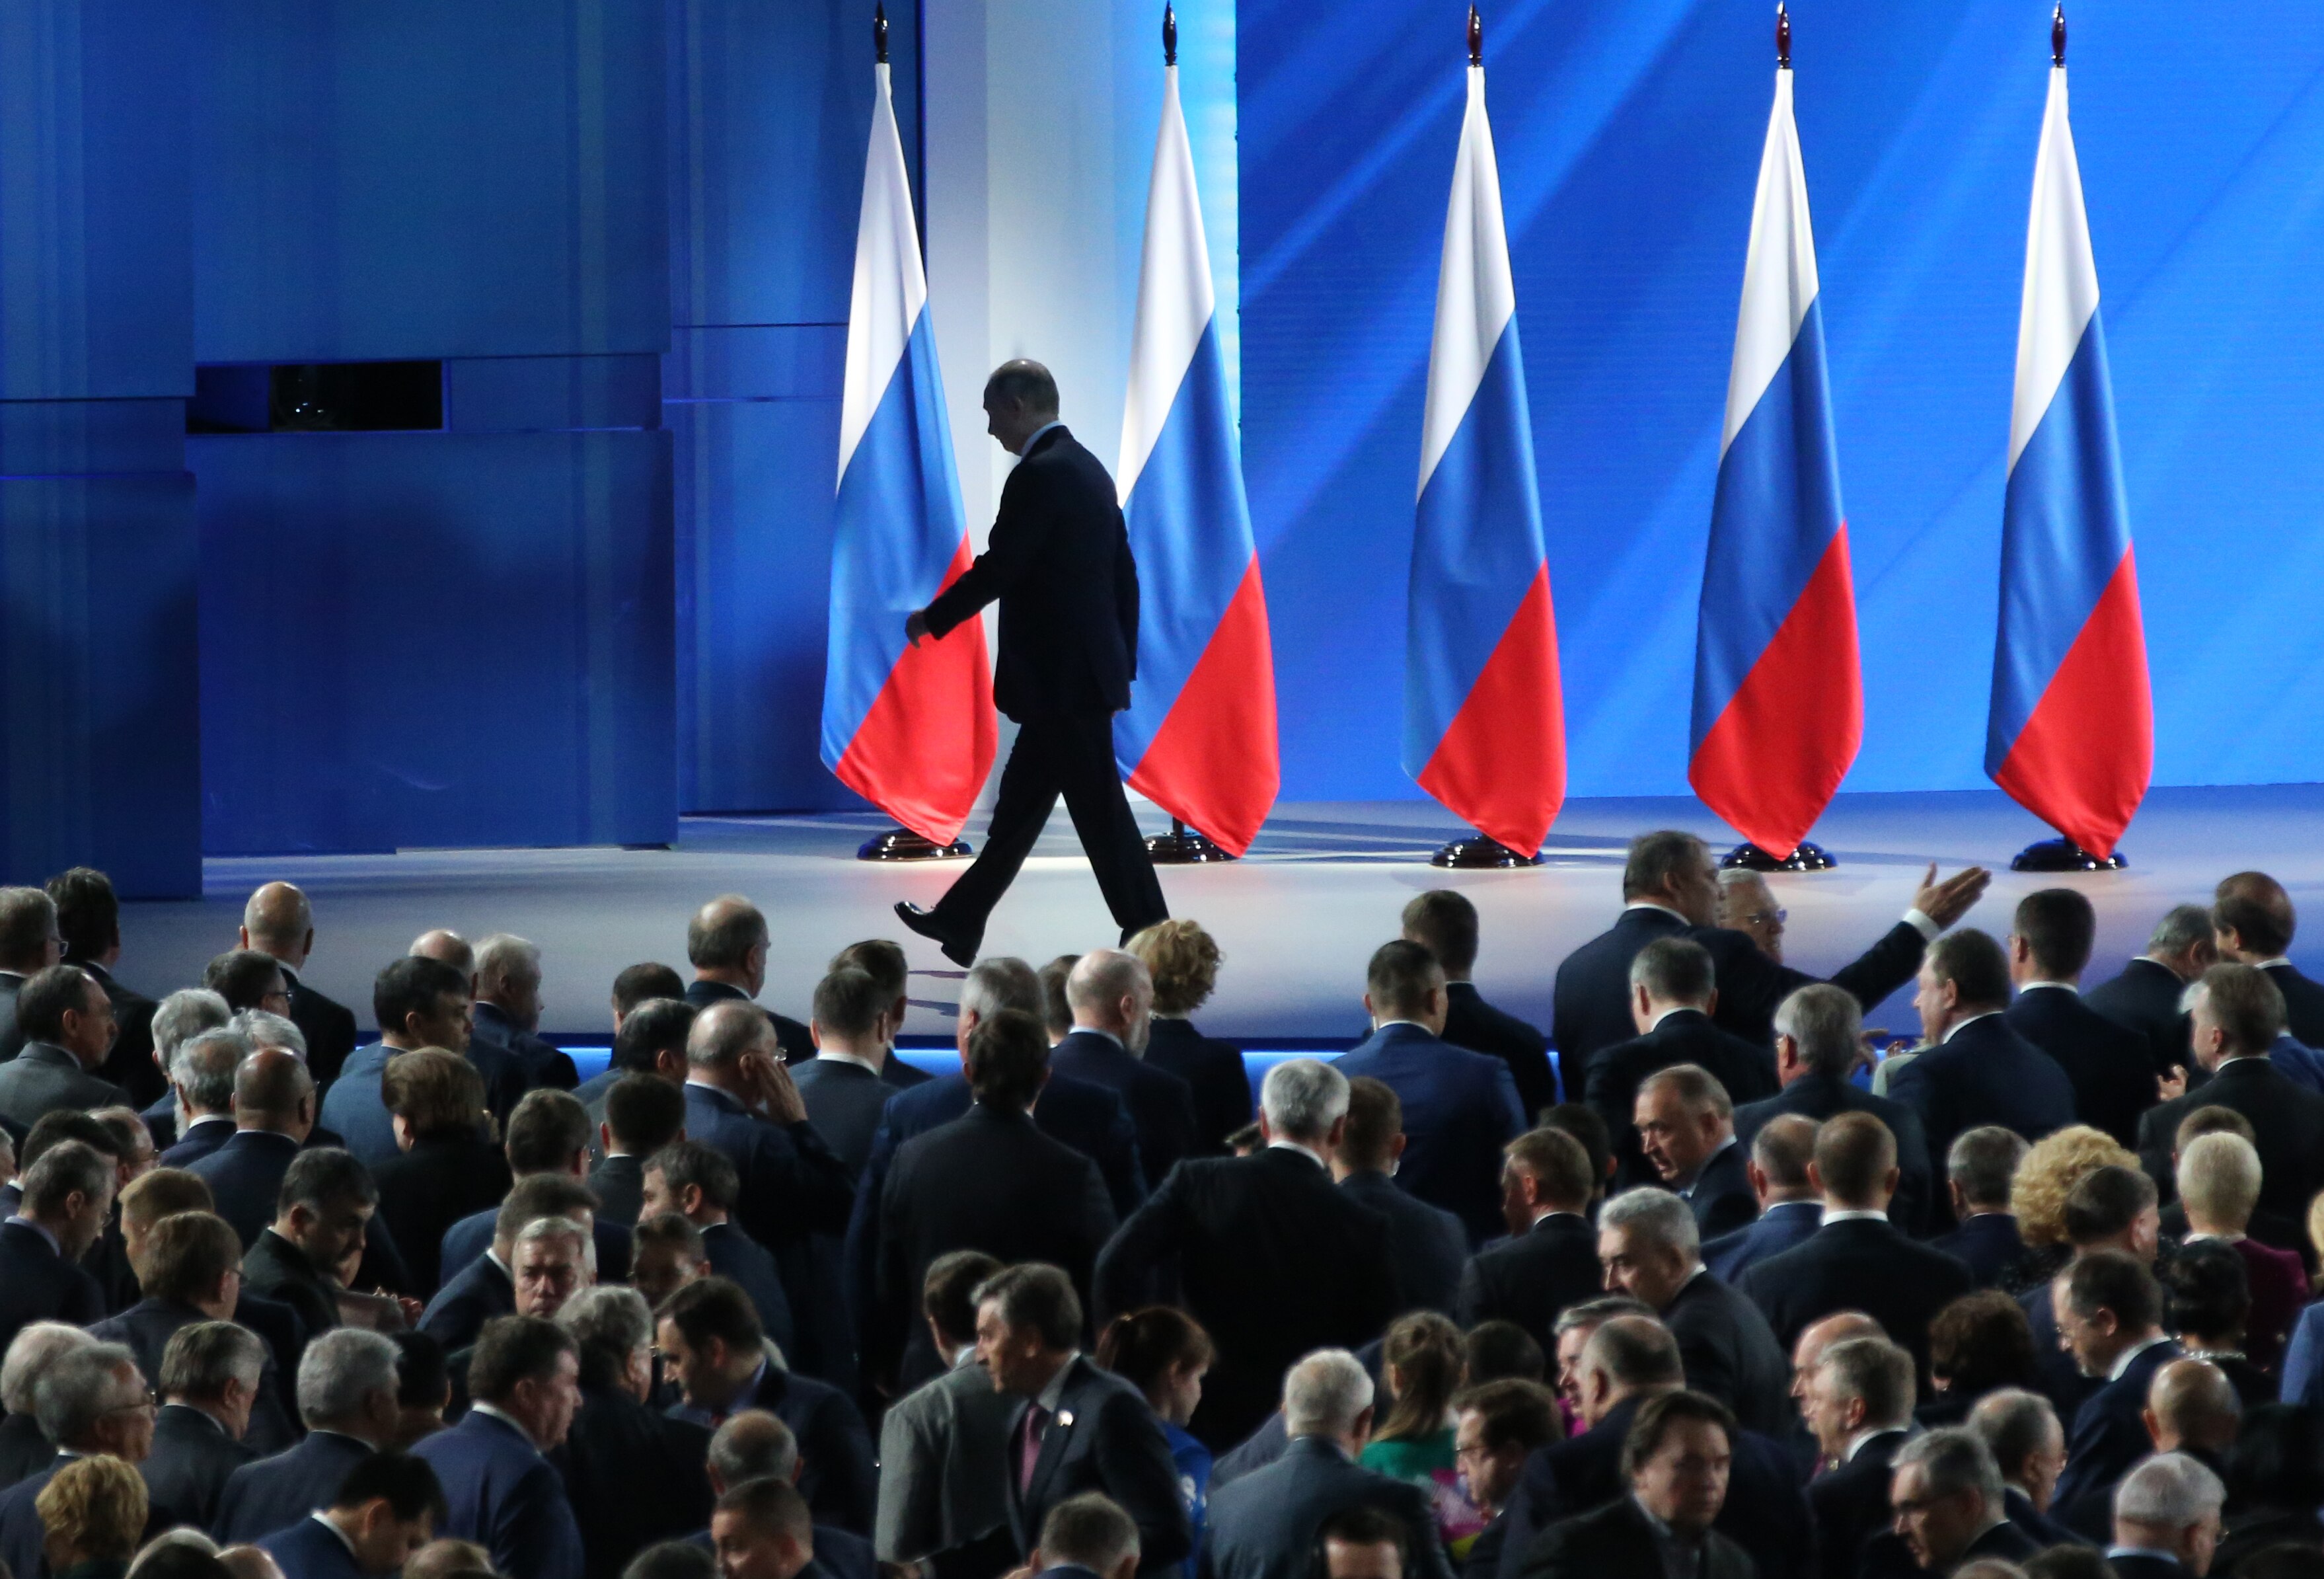 Mr Putin walks out following his national address.